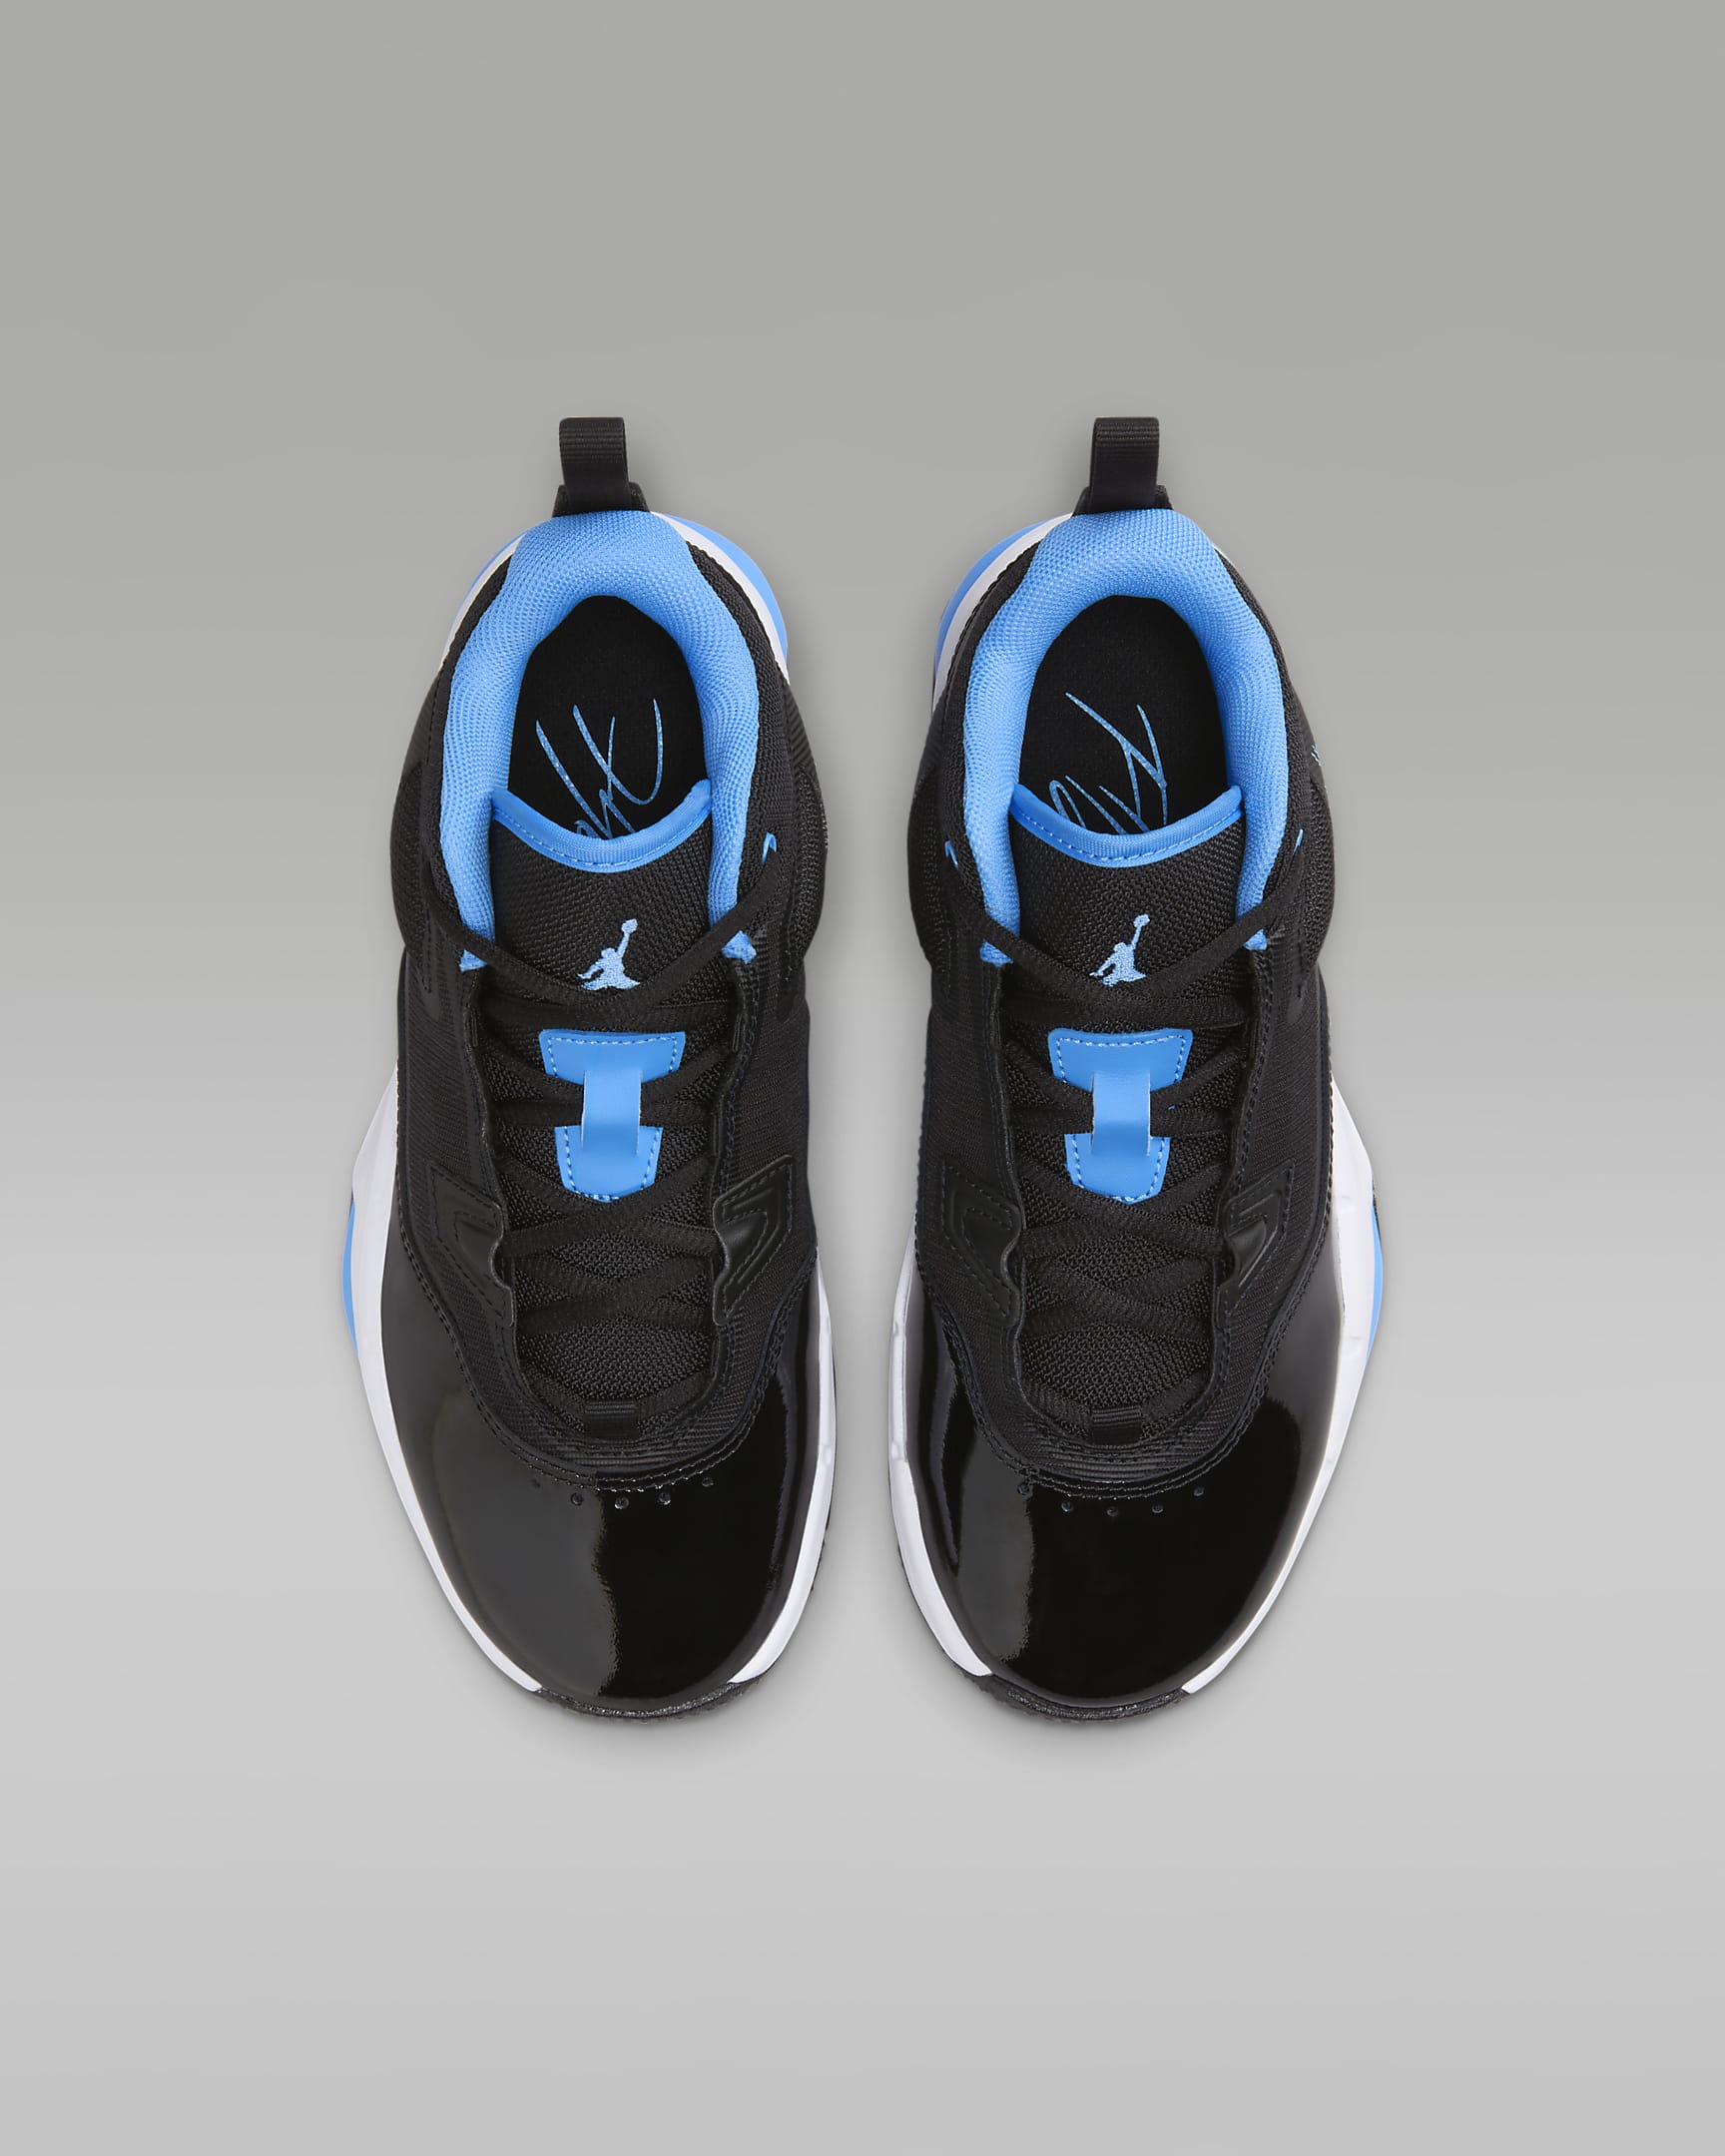 Jordan Stay Loyal 3 Older Kids' Shoes - Black/White/University Blue